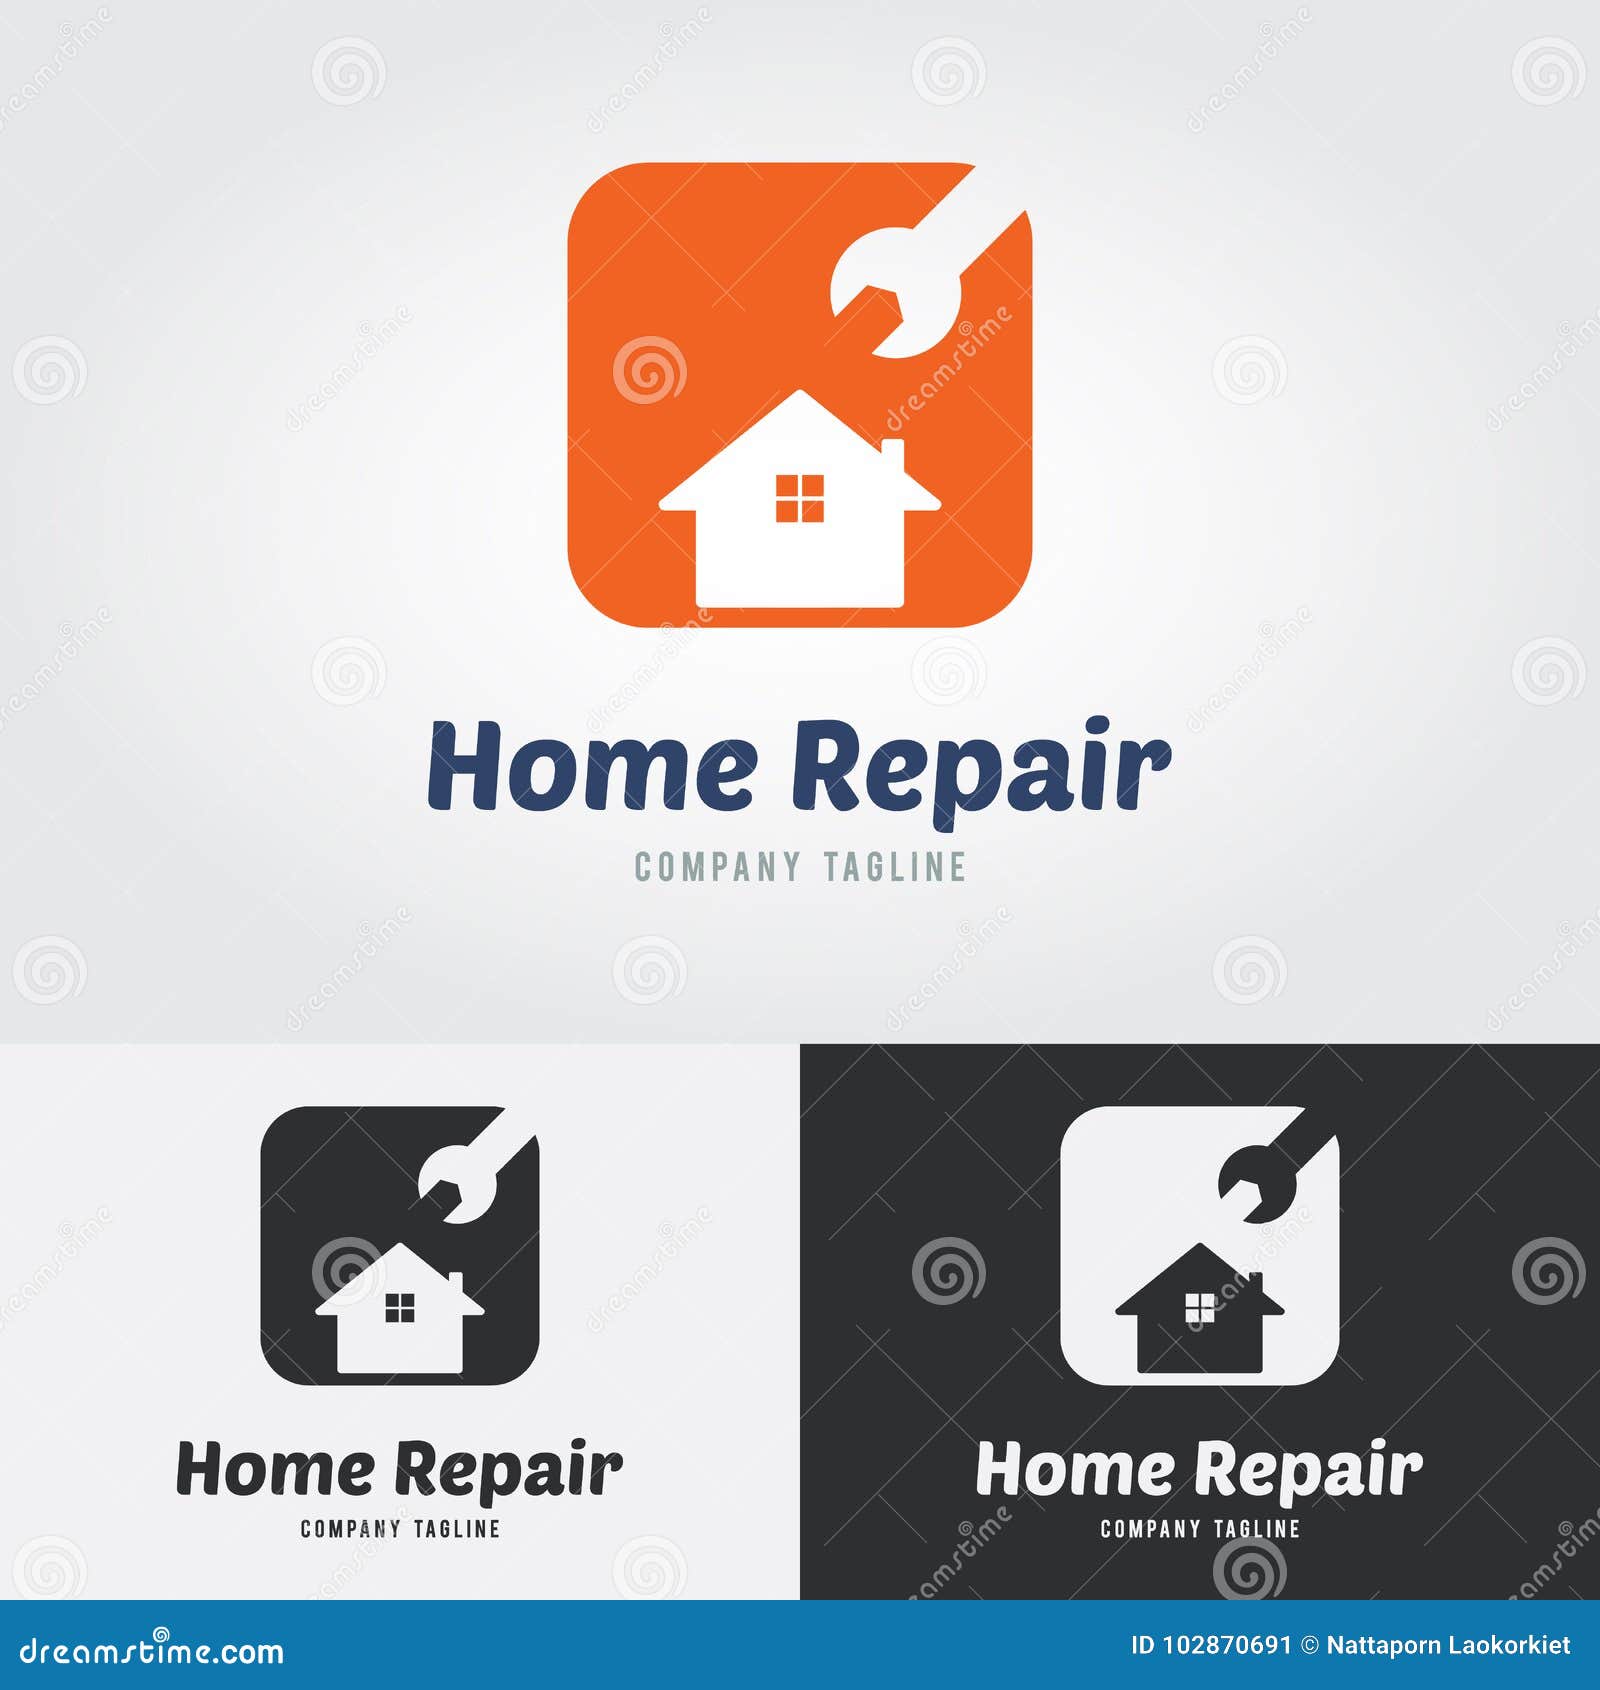 Home Repai Rlogo Template Logo For Home Repair Shop Home